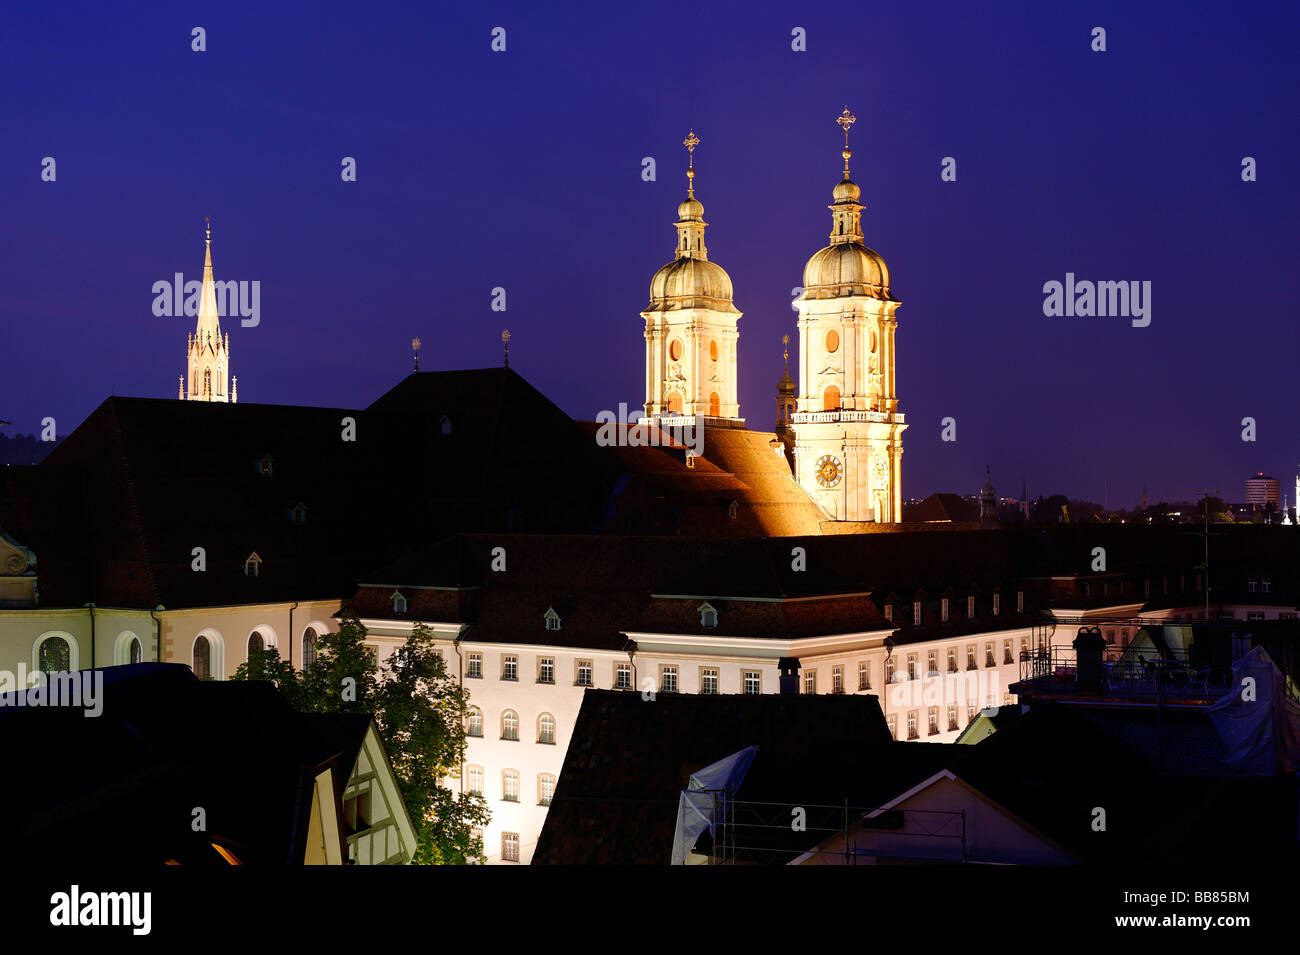 Abbey church St. Gall, St. Gallen, Canton St. Gallen, Switzerland, Europe Unesco World culture heritage Stock Photo